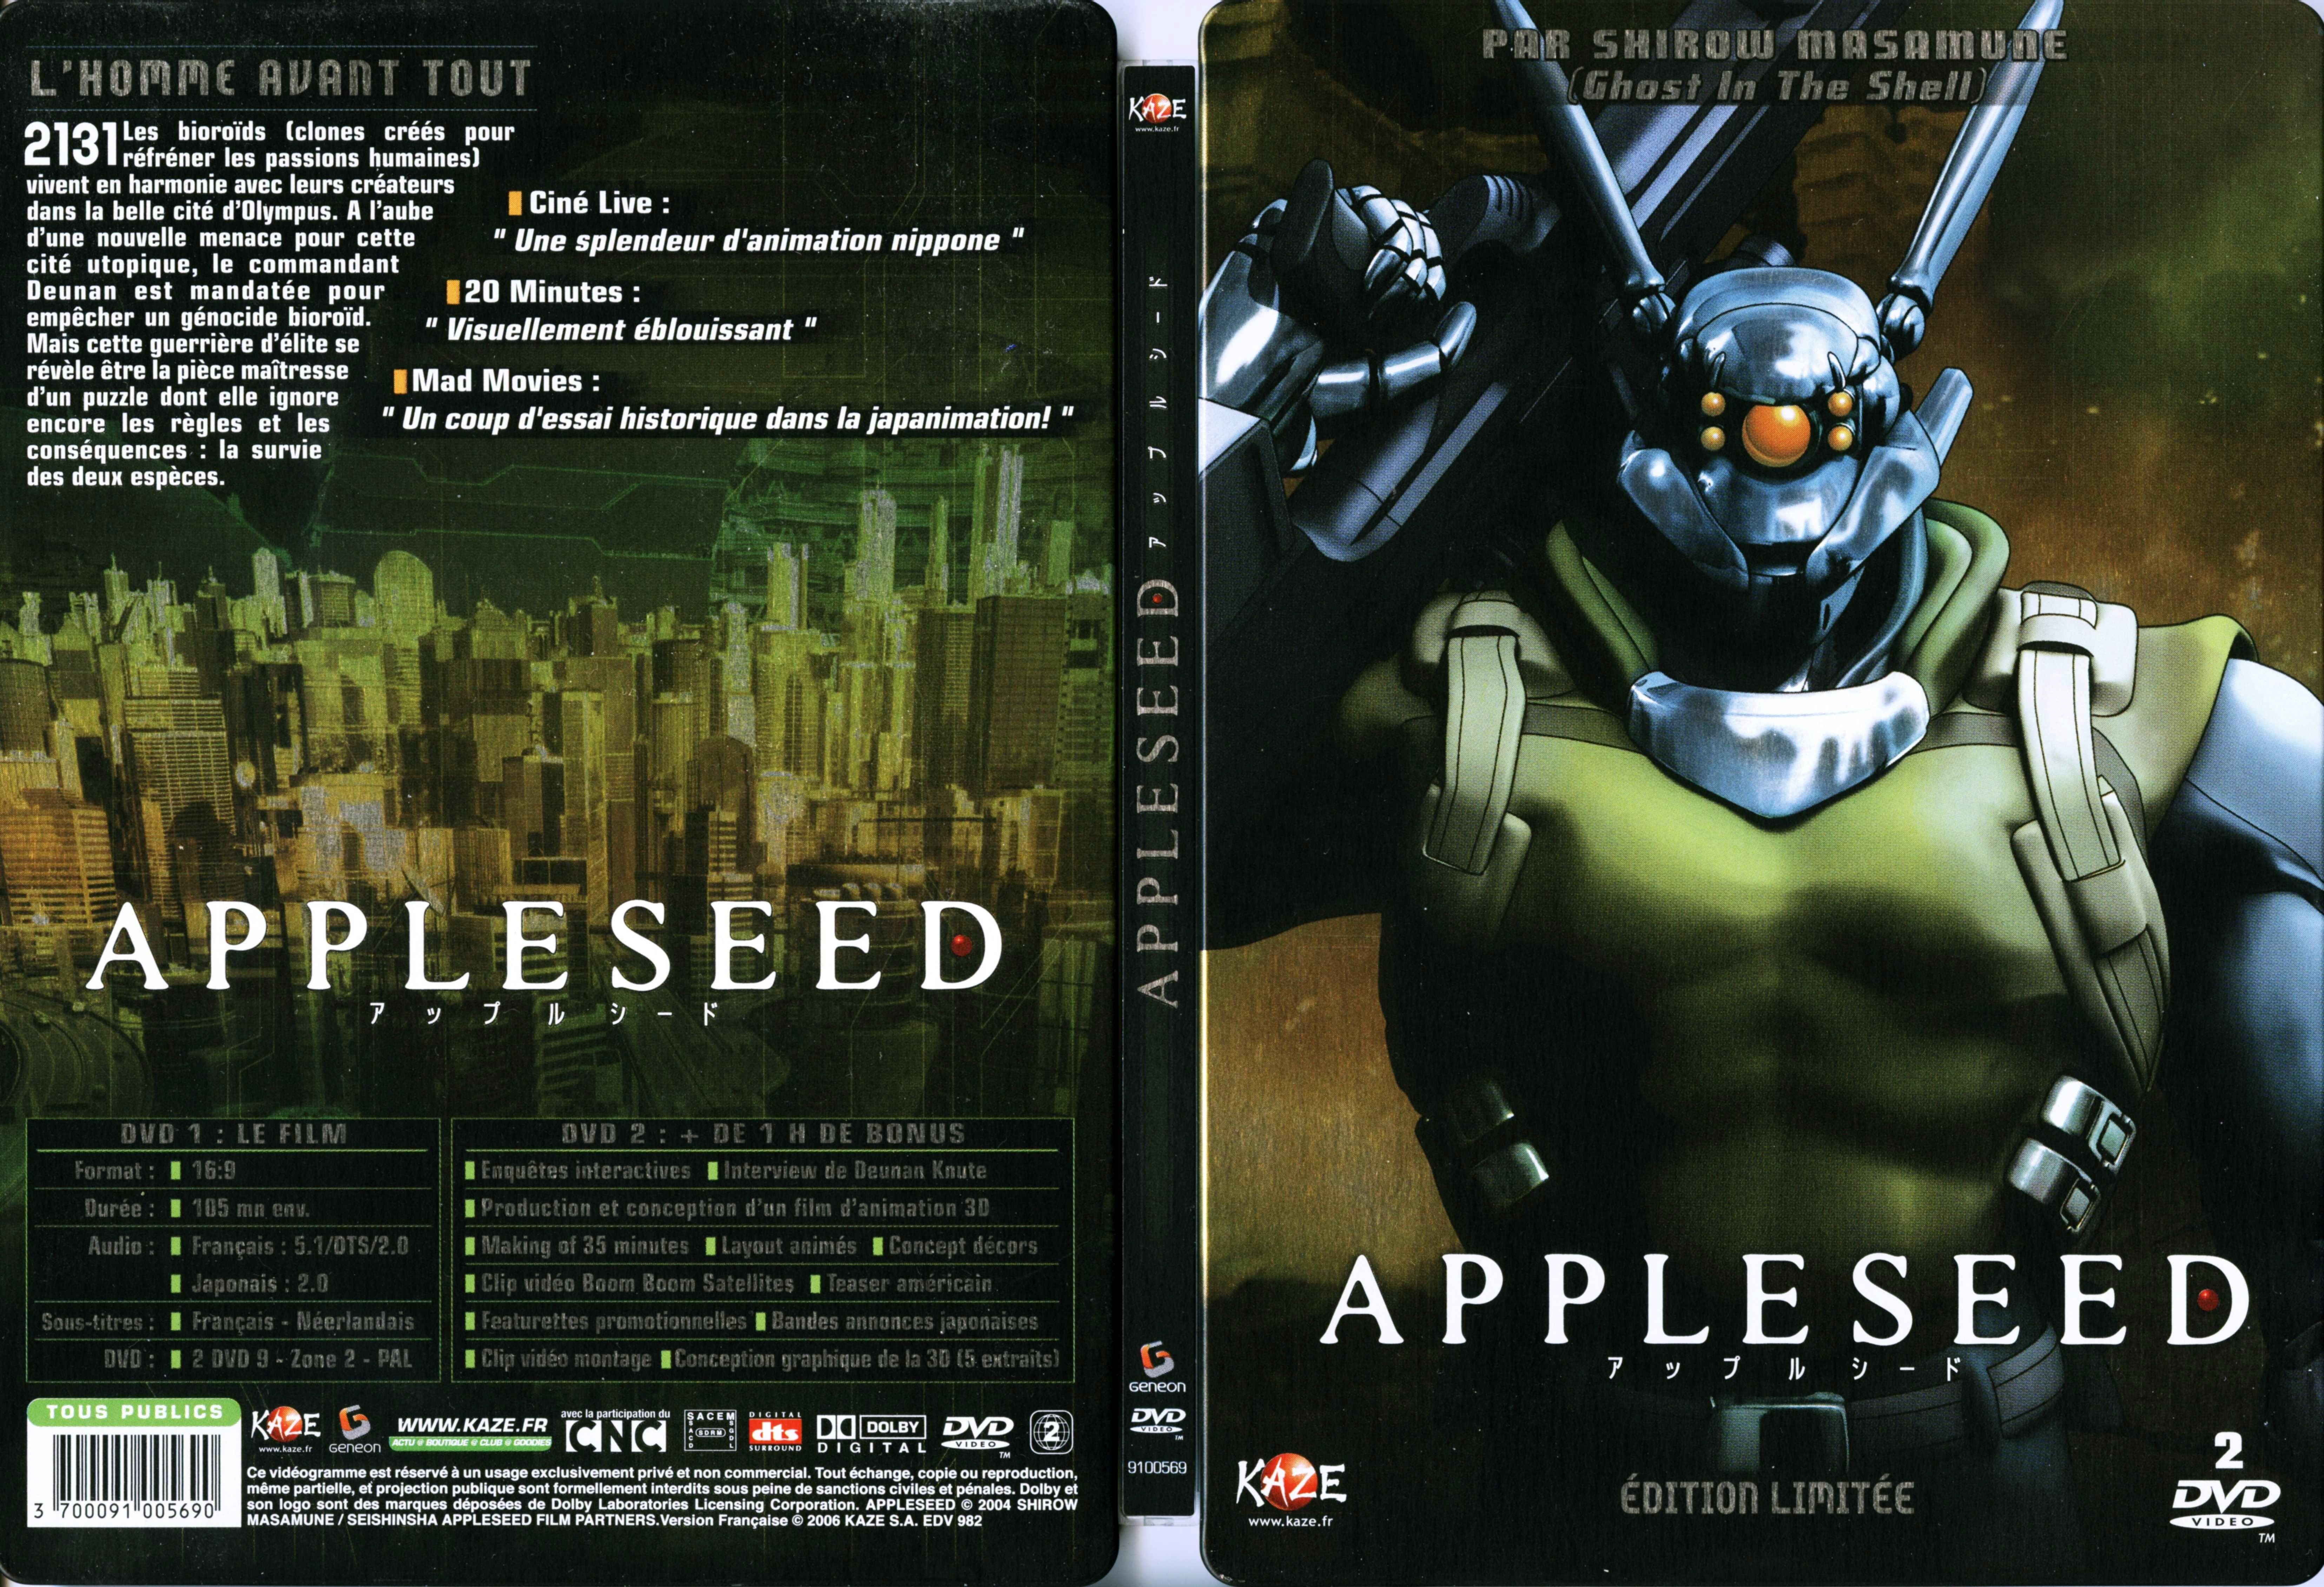 Jaquette DVD Appleseed v2